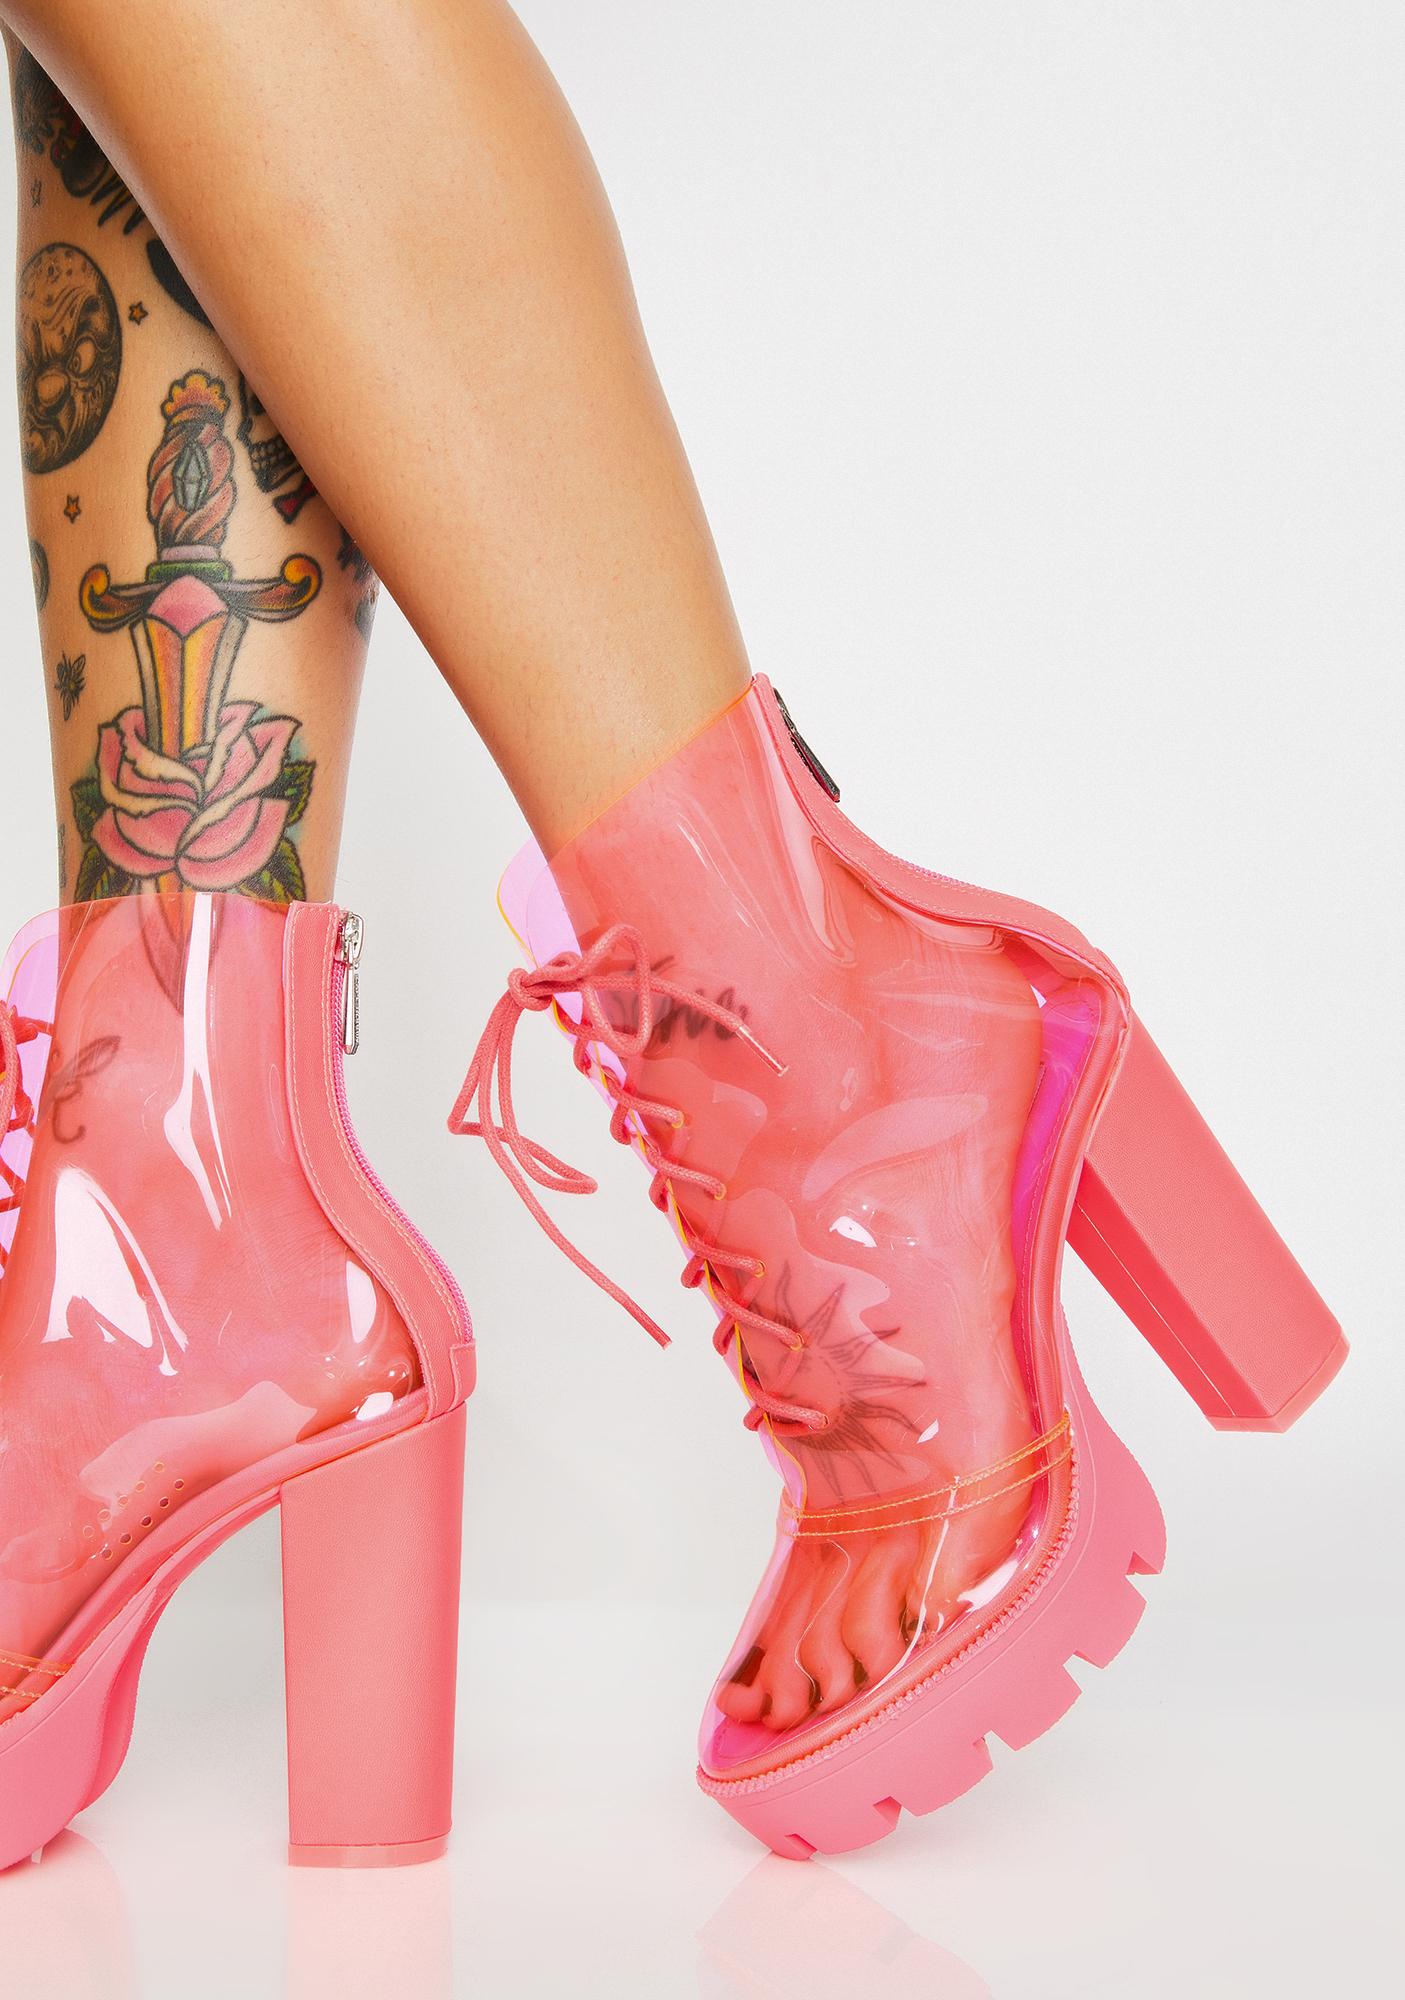 Boots Transparent PVC Pink Clear 